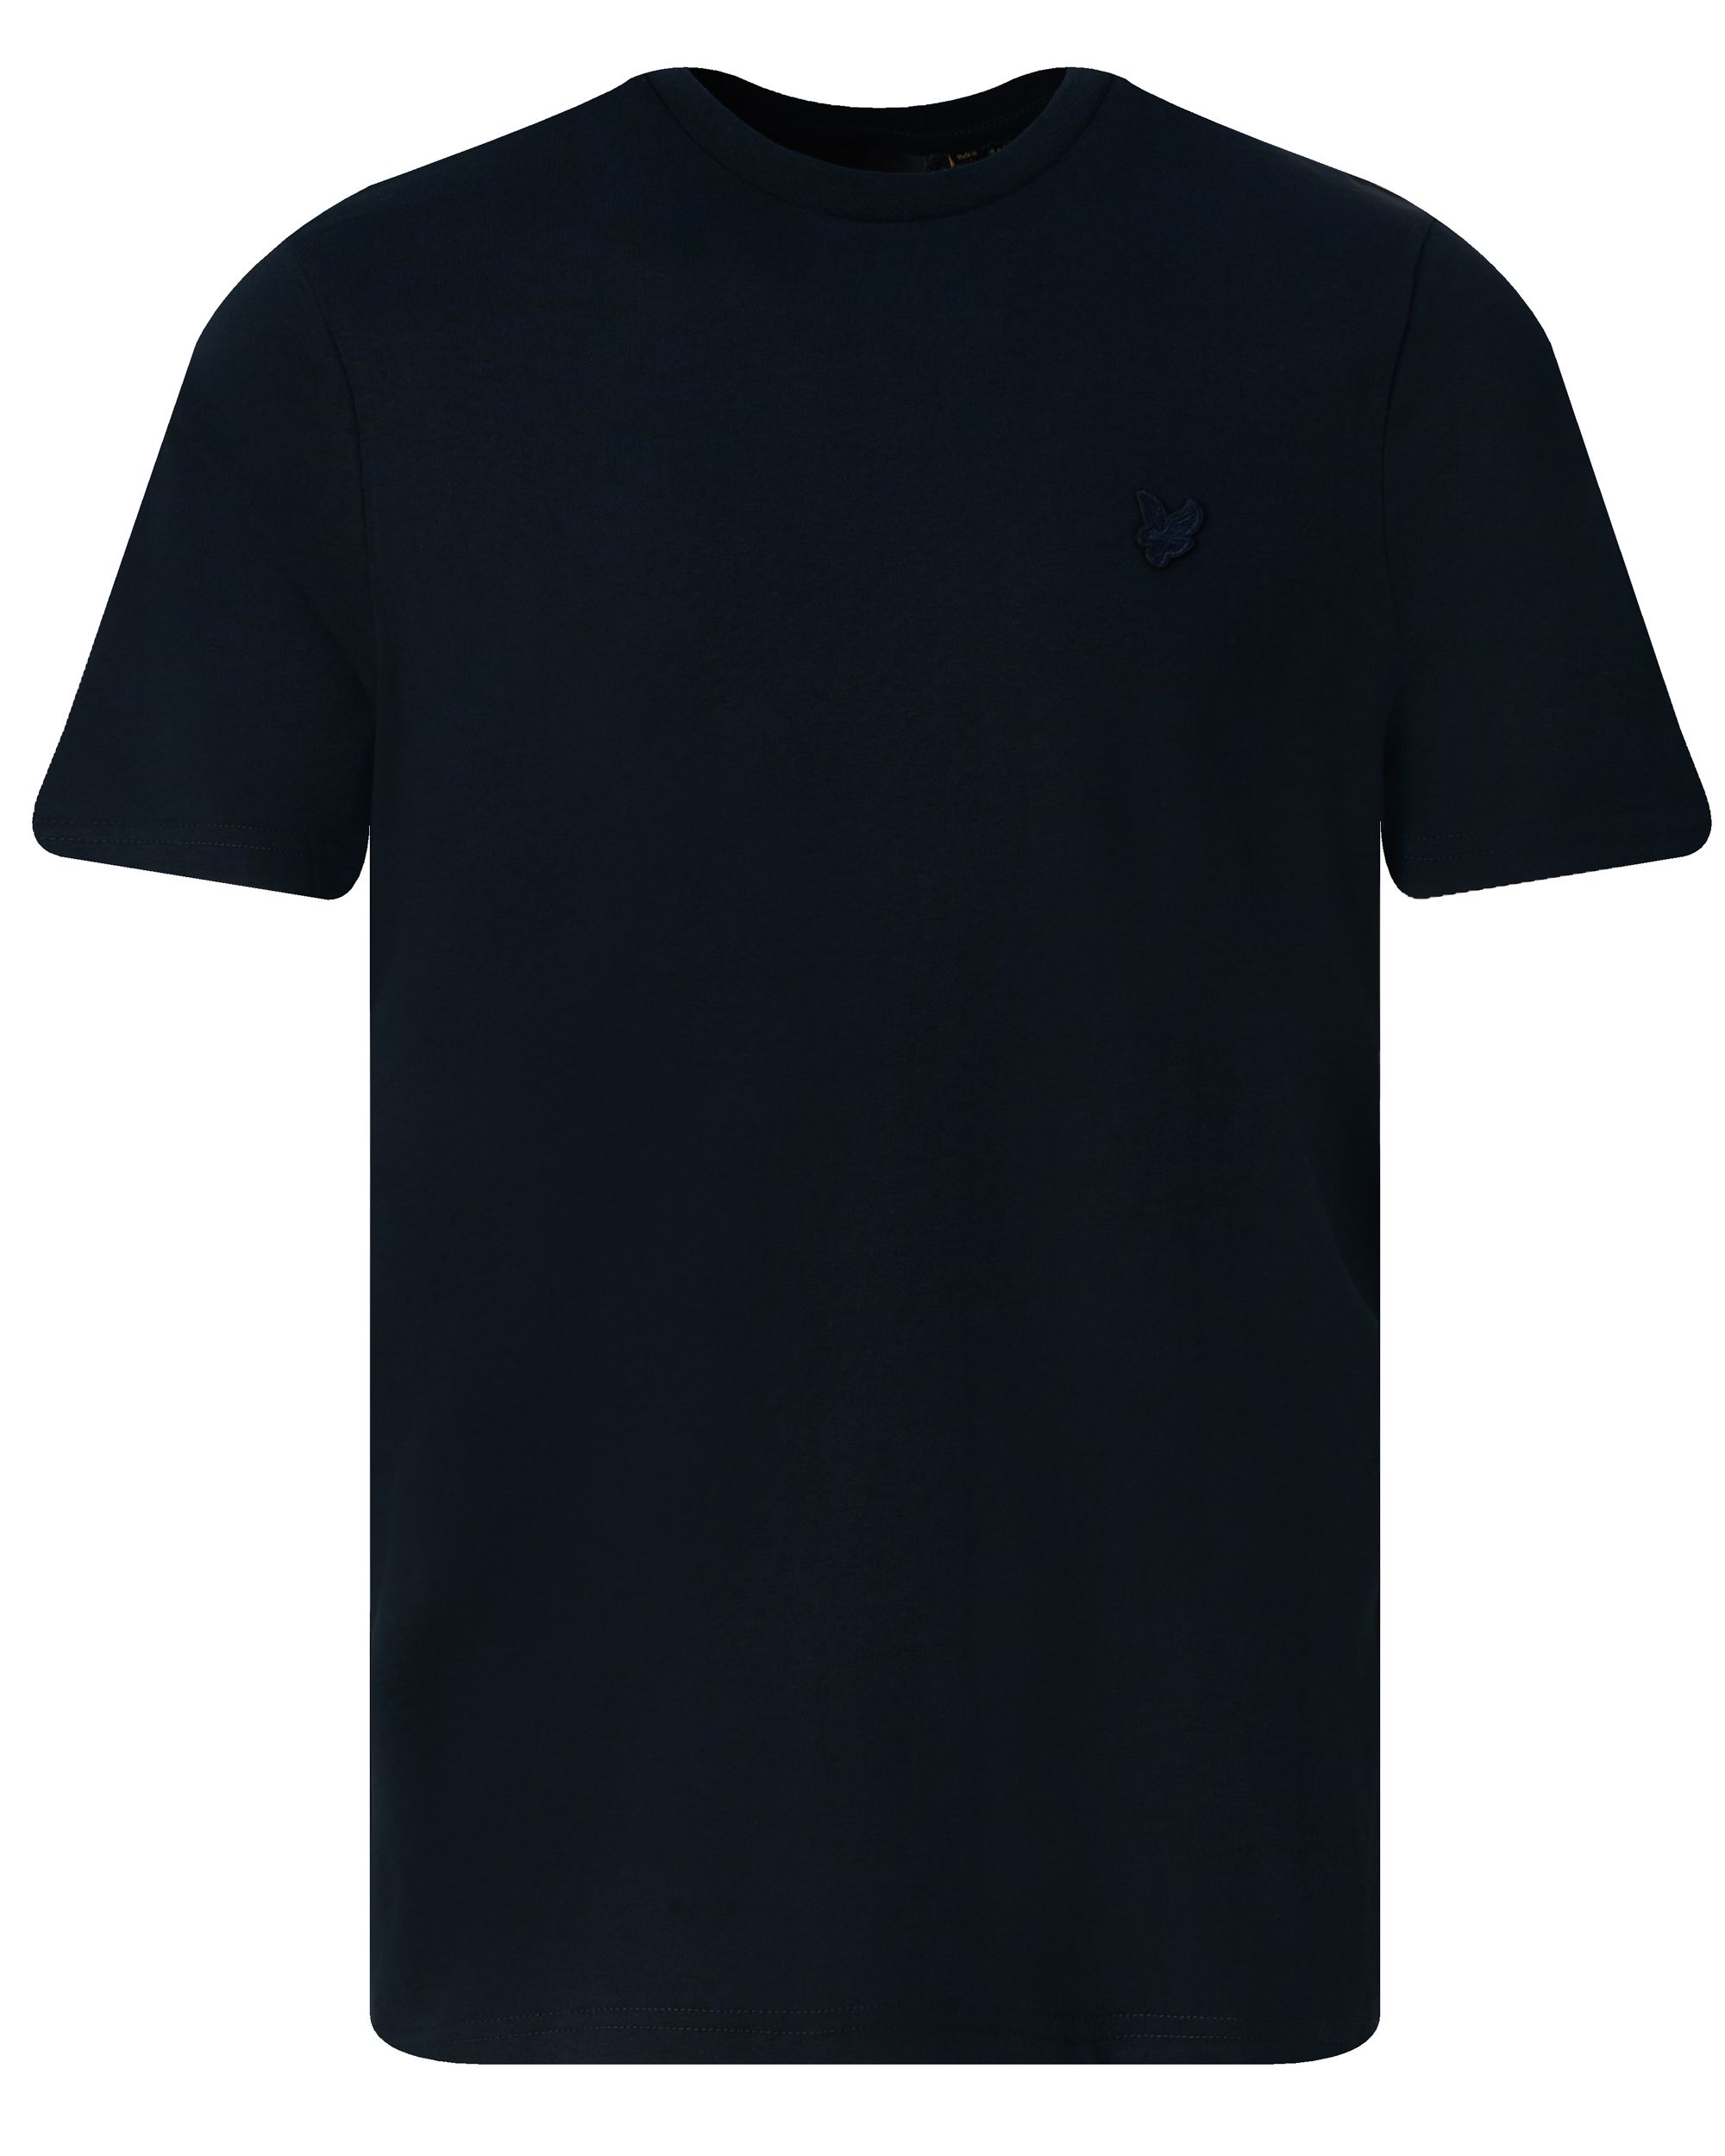 Lyle & Scott T-shirt KM Donker blauw 095447-001-L